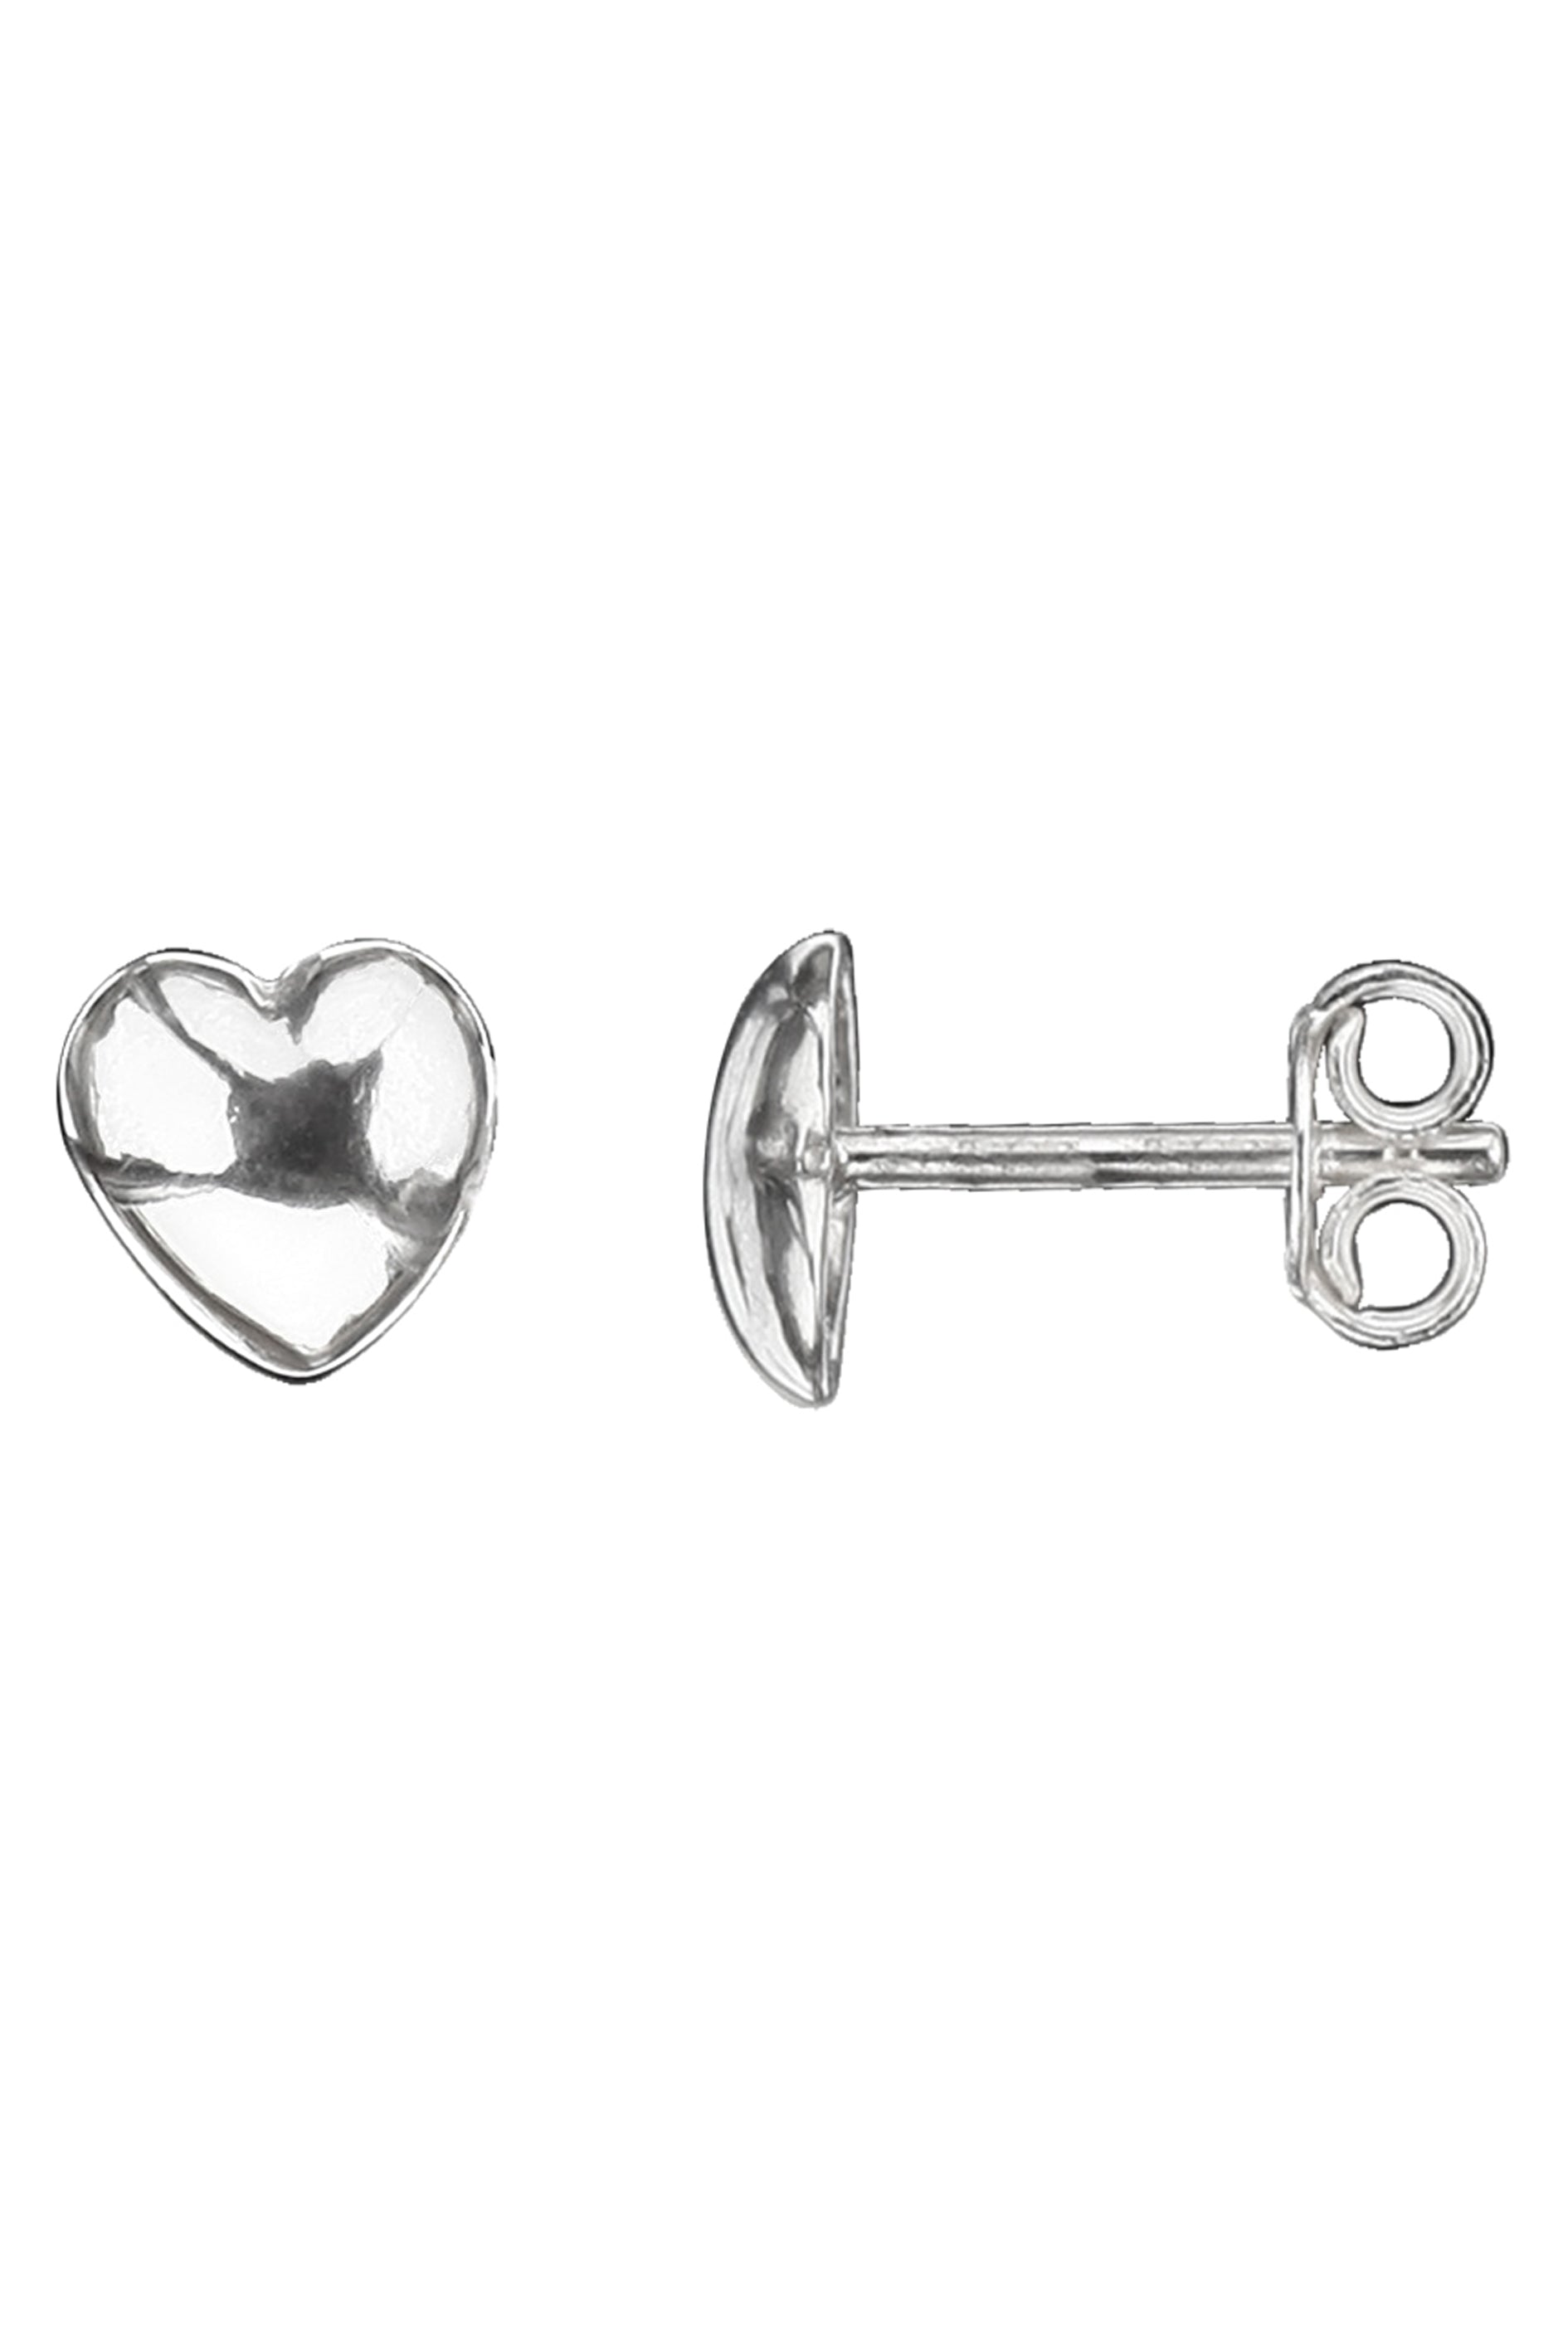 Tiffany & Co Open Heart Earrings Studs Peretti Silver Gift Love Statement  Cool